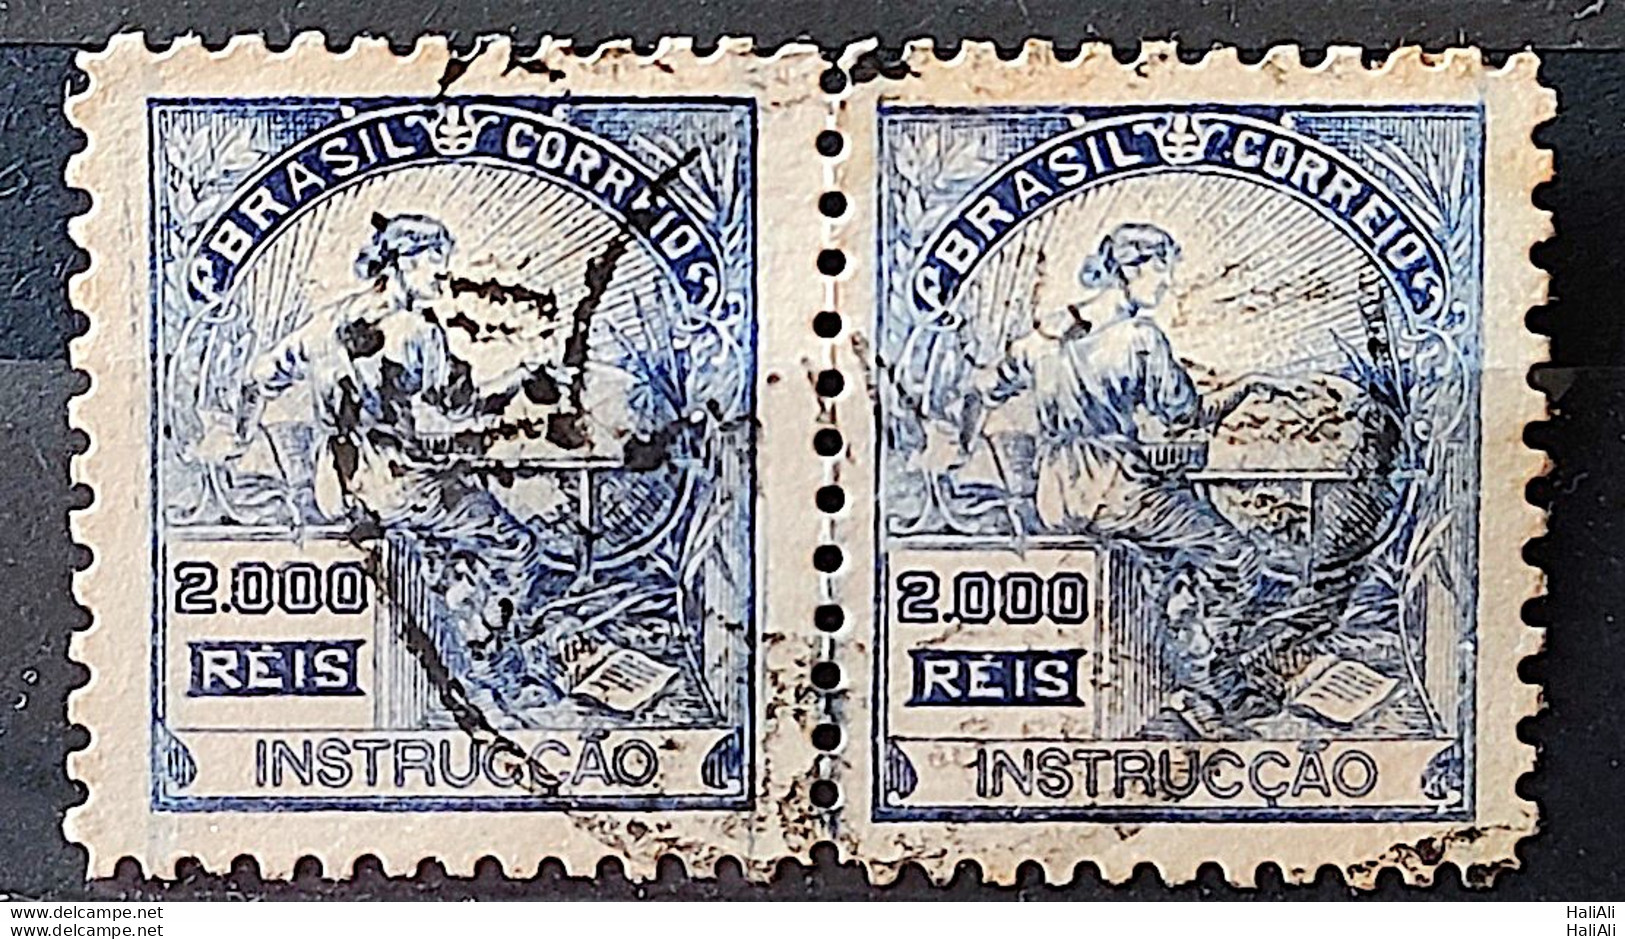 Brazil Regular Stamp Cod RHM 294 Grandpa Instruction 2000 Reis Filigree L 1934 Par Circulated - Gebruikt